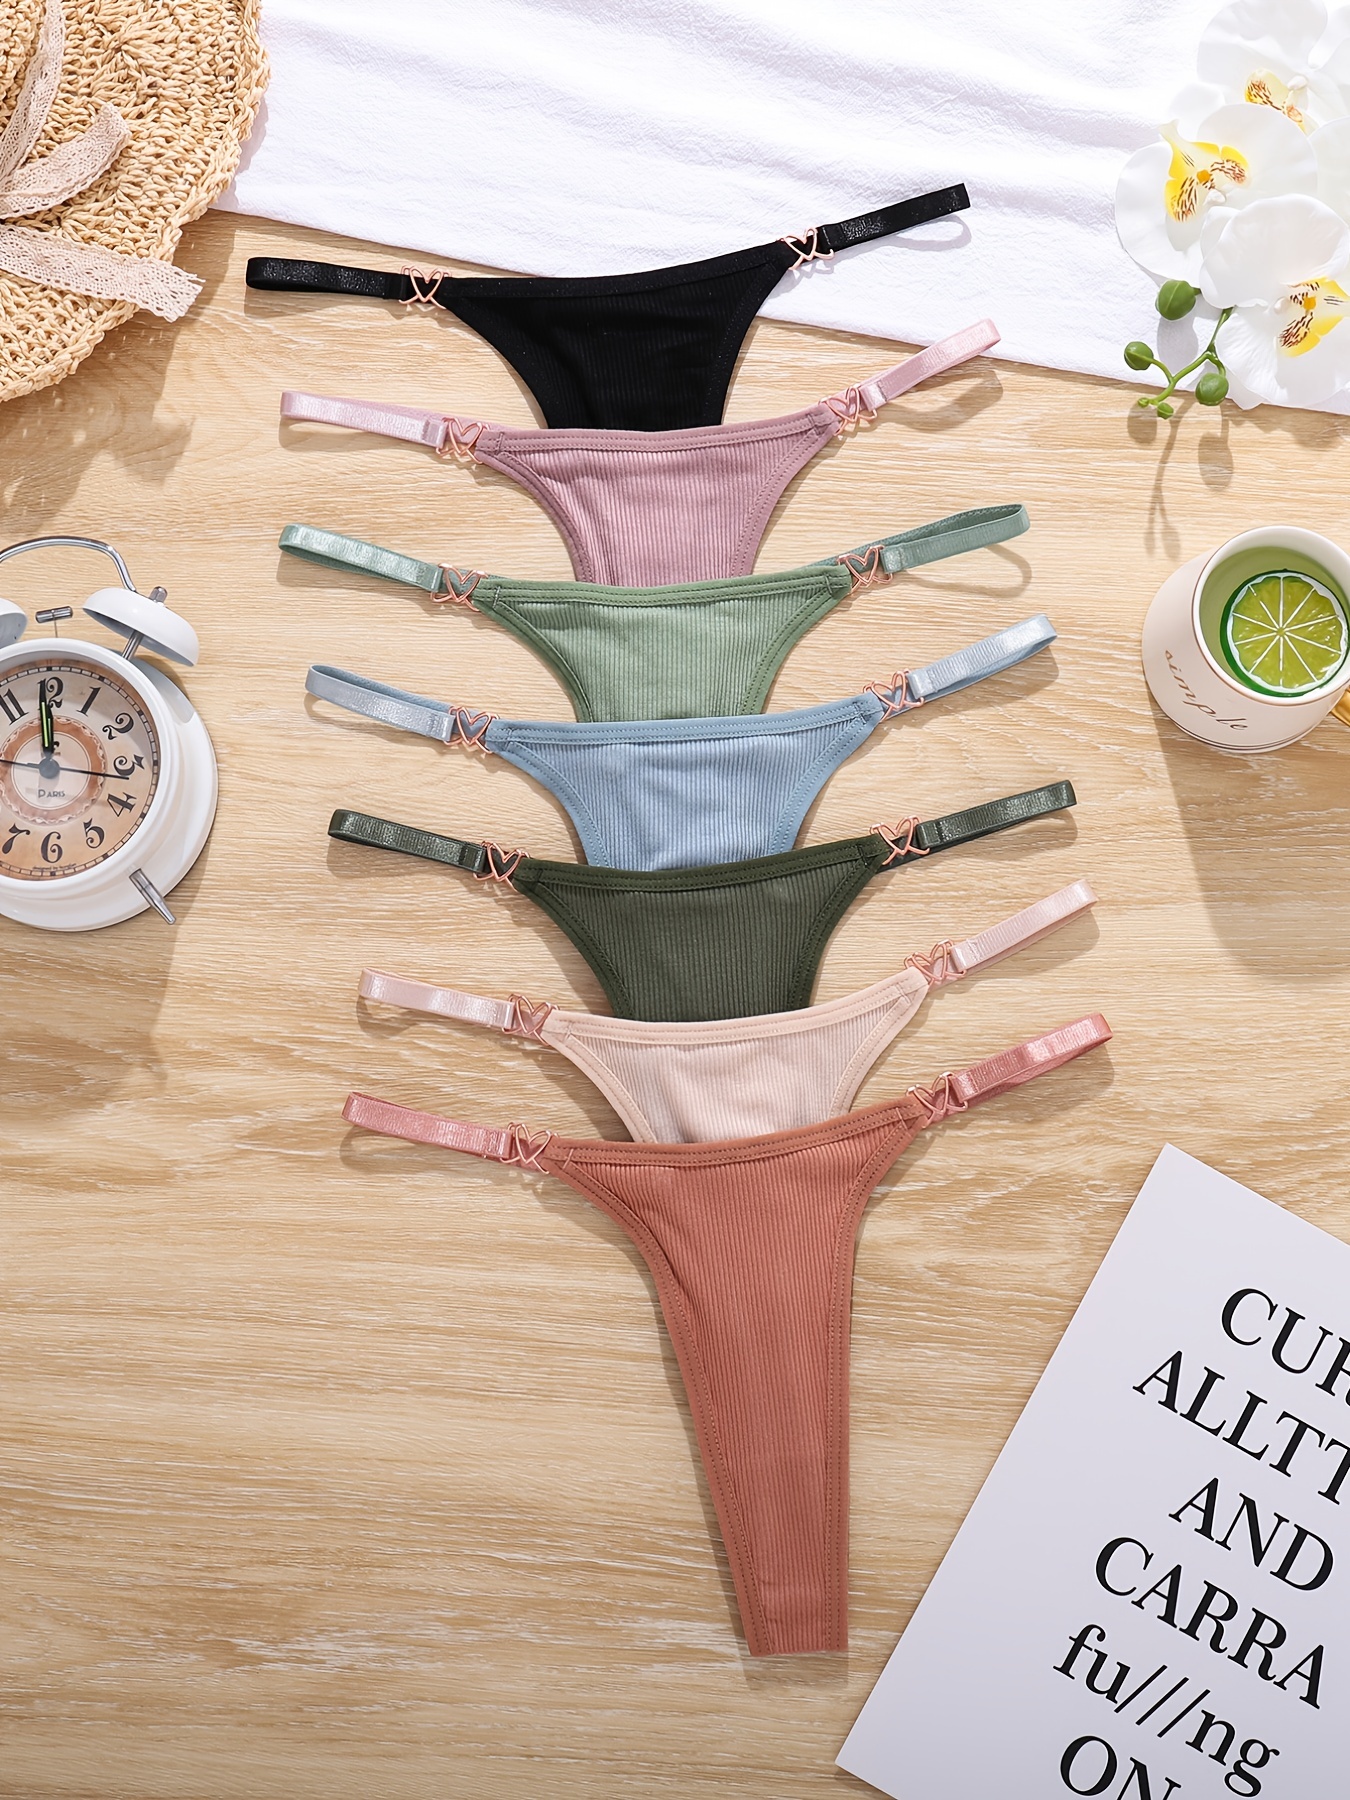 Sexy Women's Briefs Underwear G-string Thong Panties Low Waist